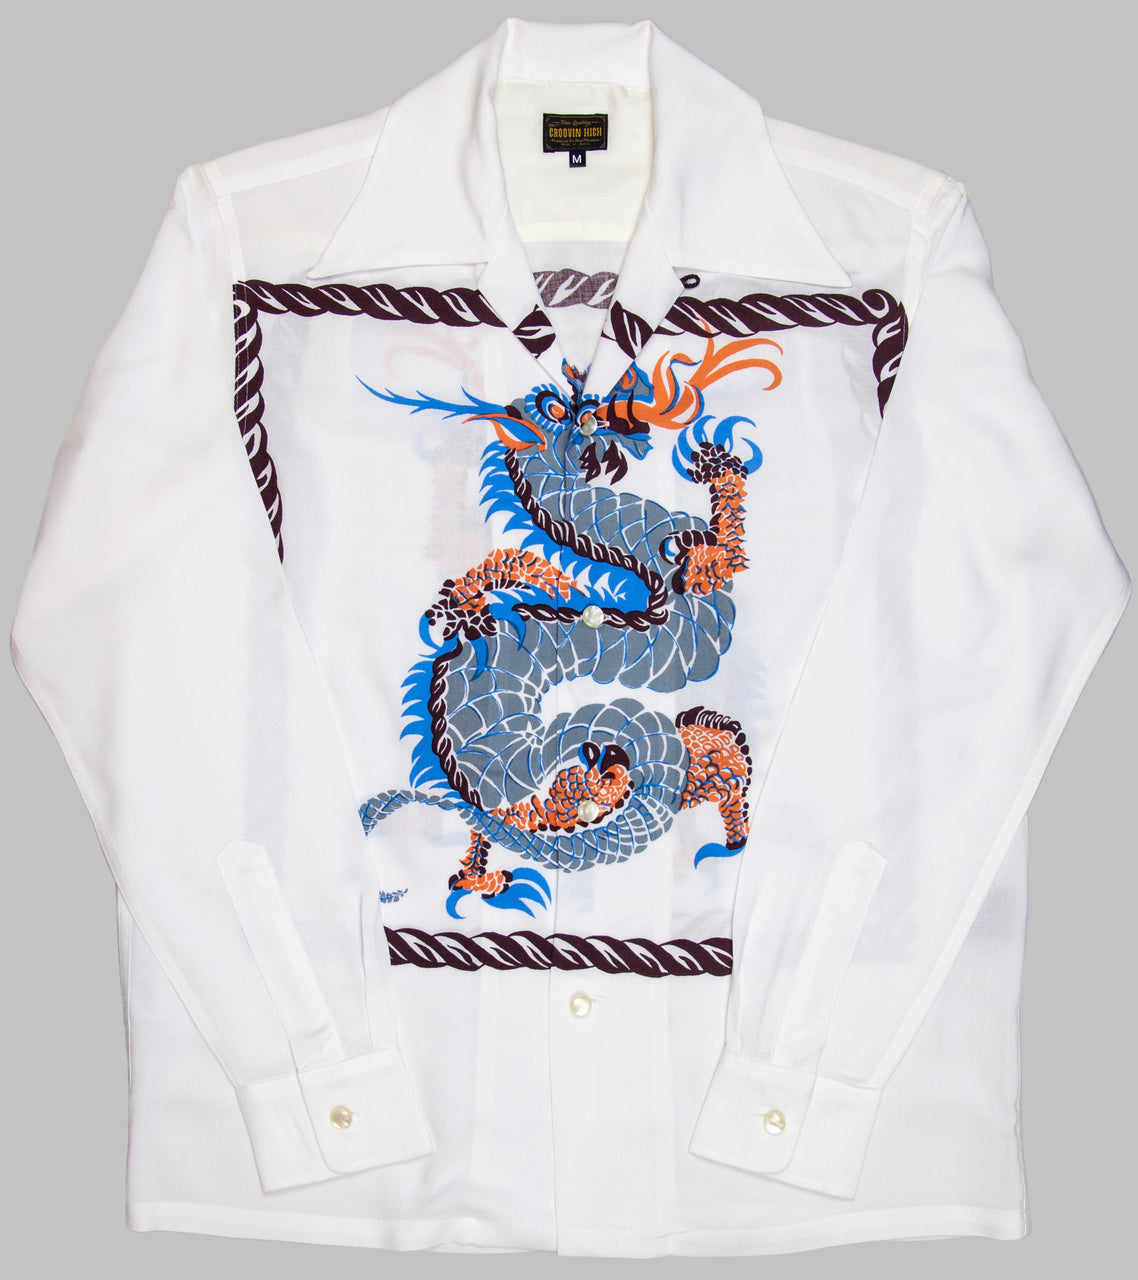 Groovin High Open Collar Shirt Dragon Bryceland S Co